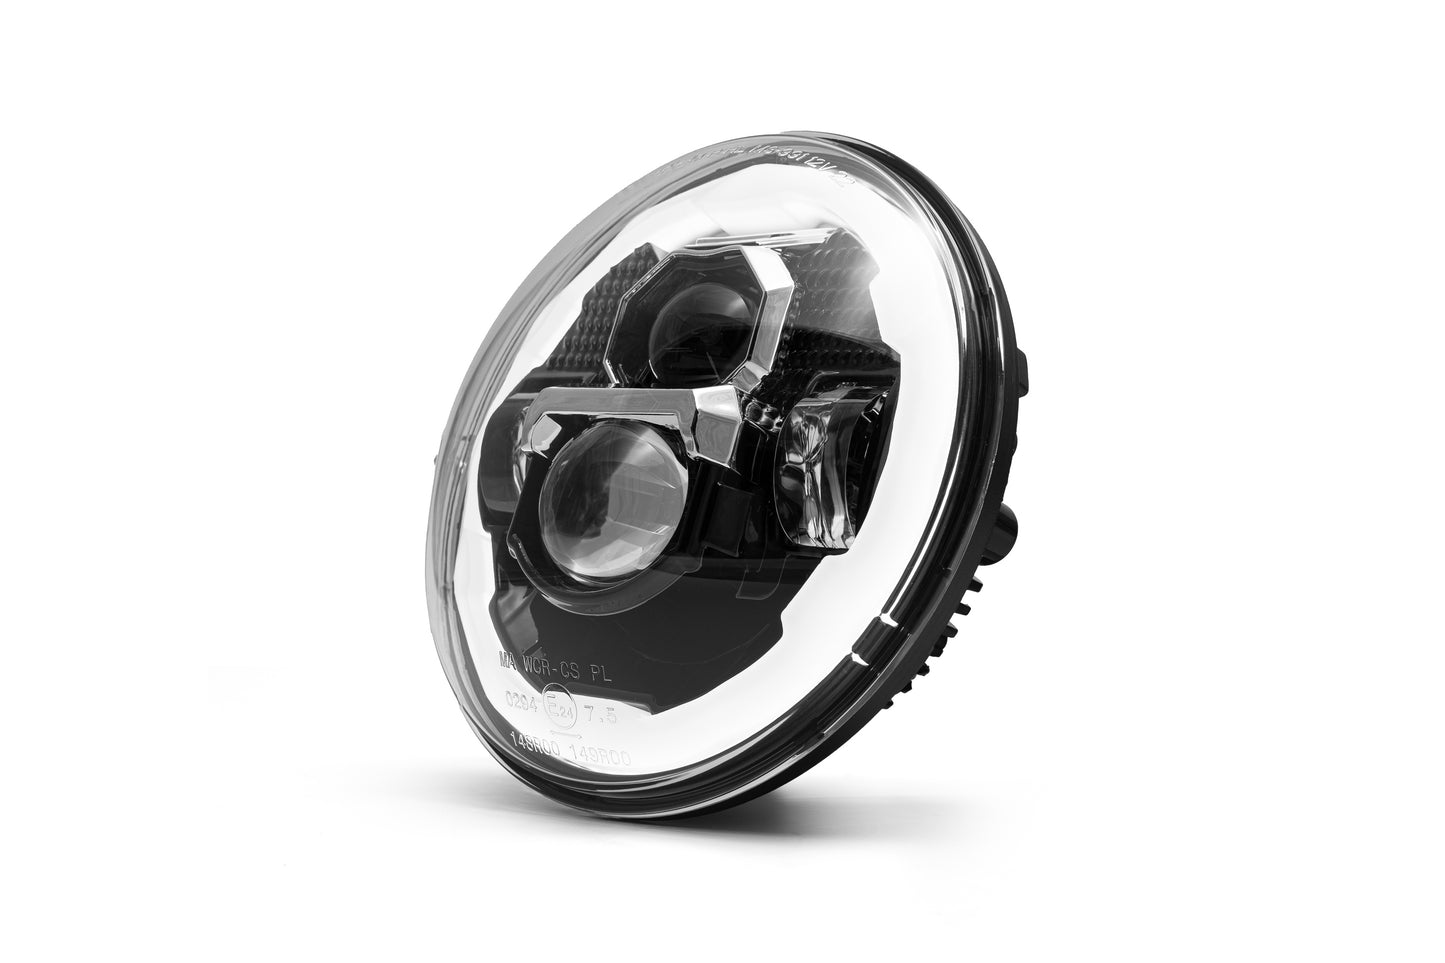 Harley Davidson headlight with parking light by Killer Custom white background